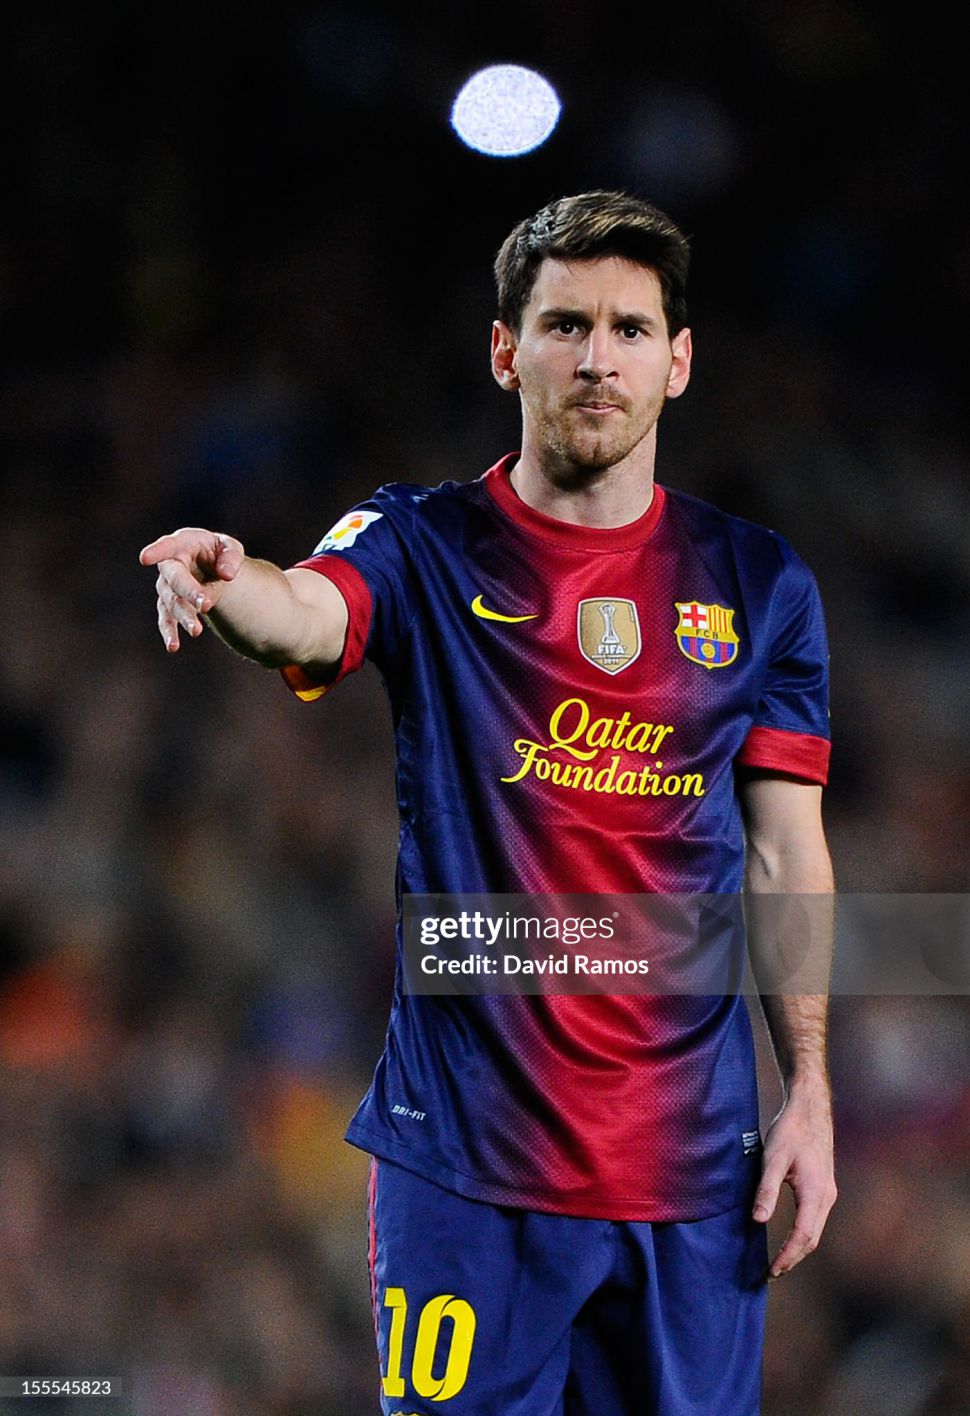 Font Messi 10 Barcelona 2012 2013 2014 nameset home third official